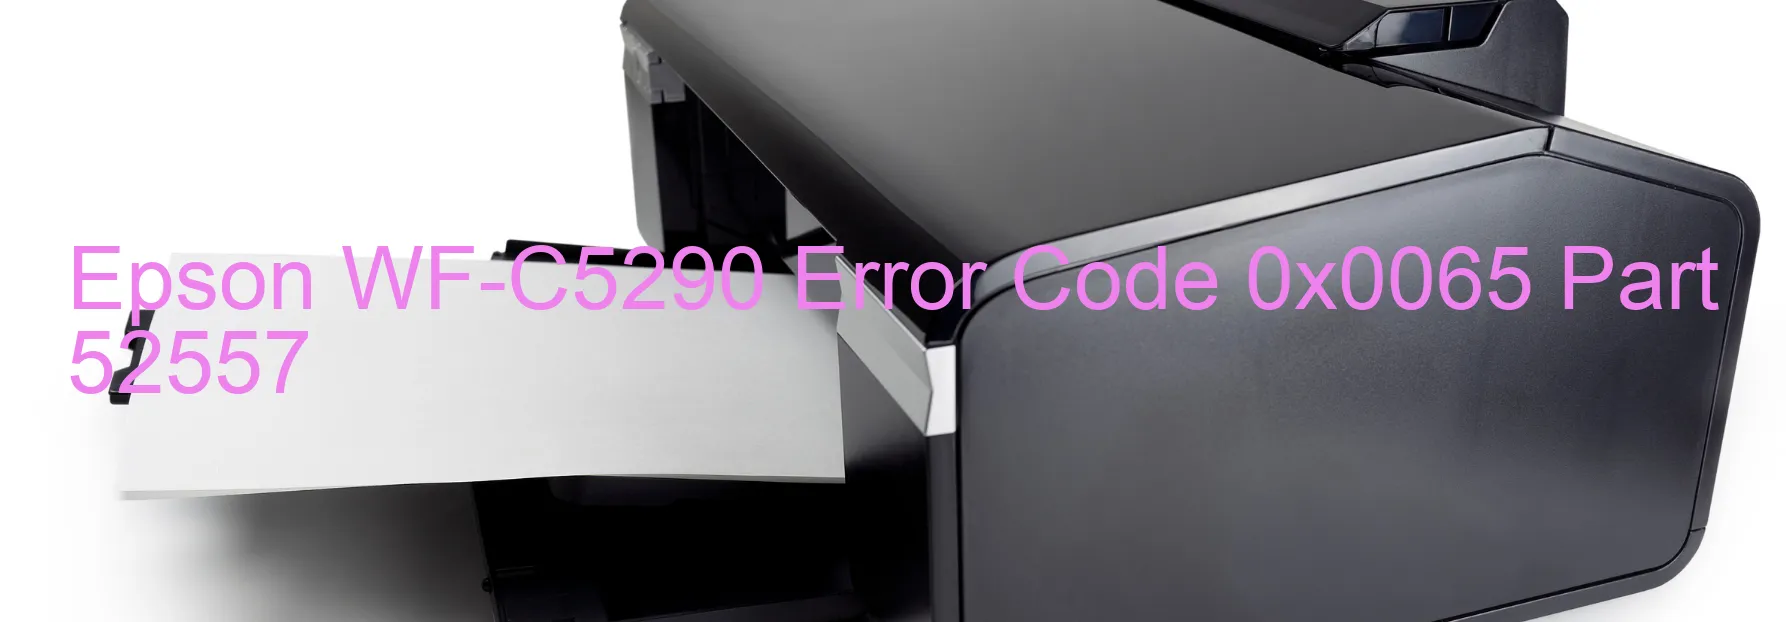 Epson WF-C5290 Error 0x0065